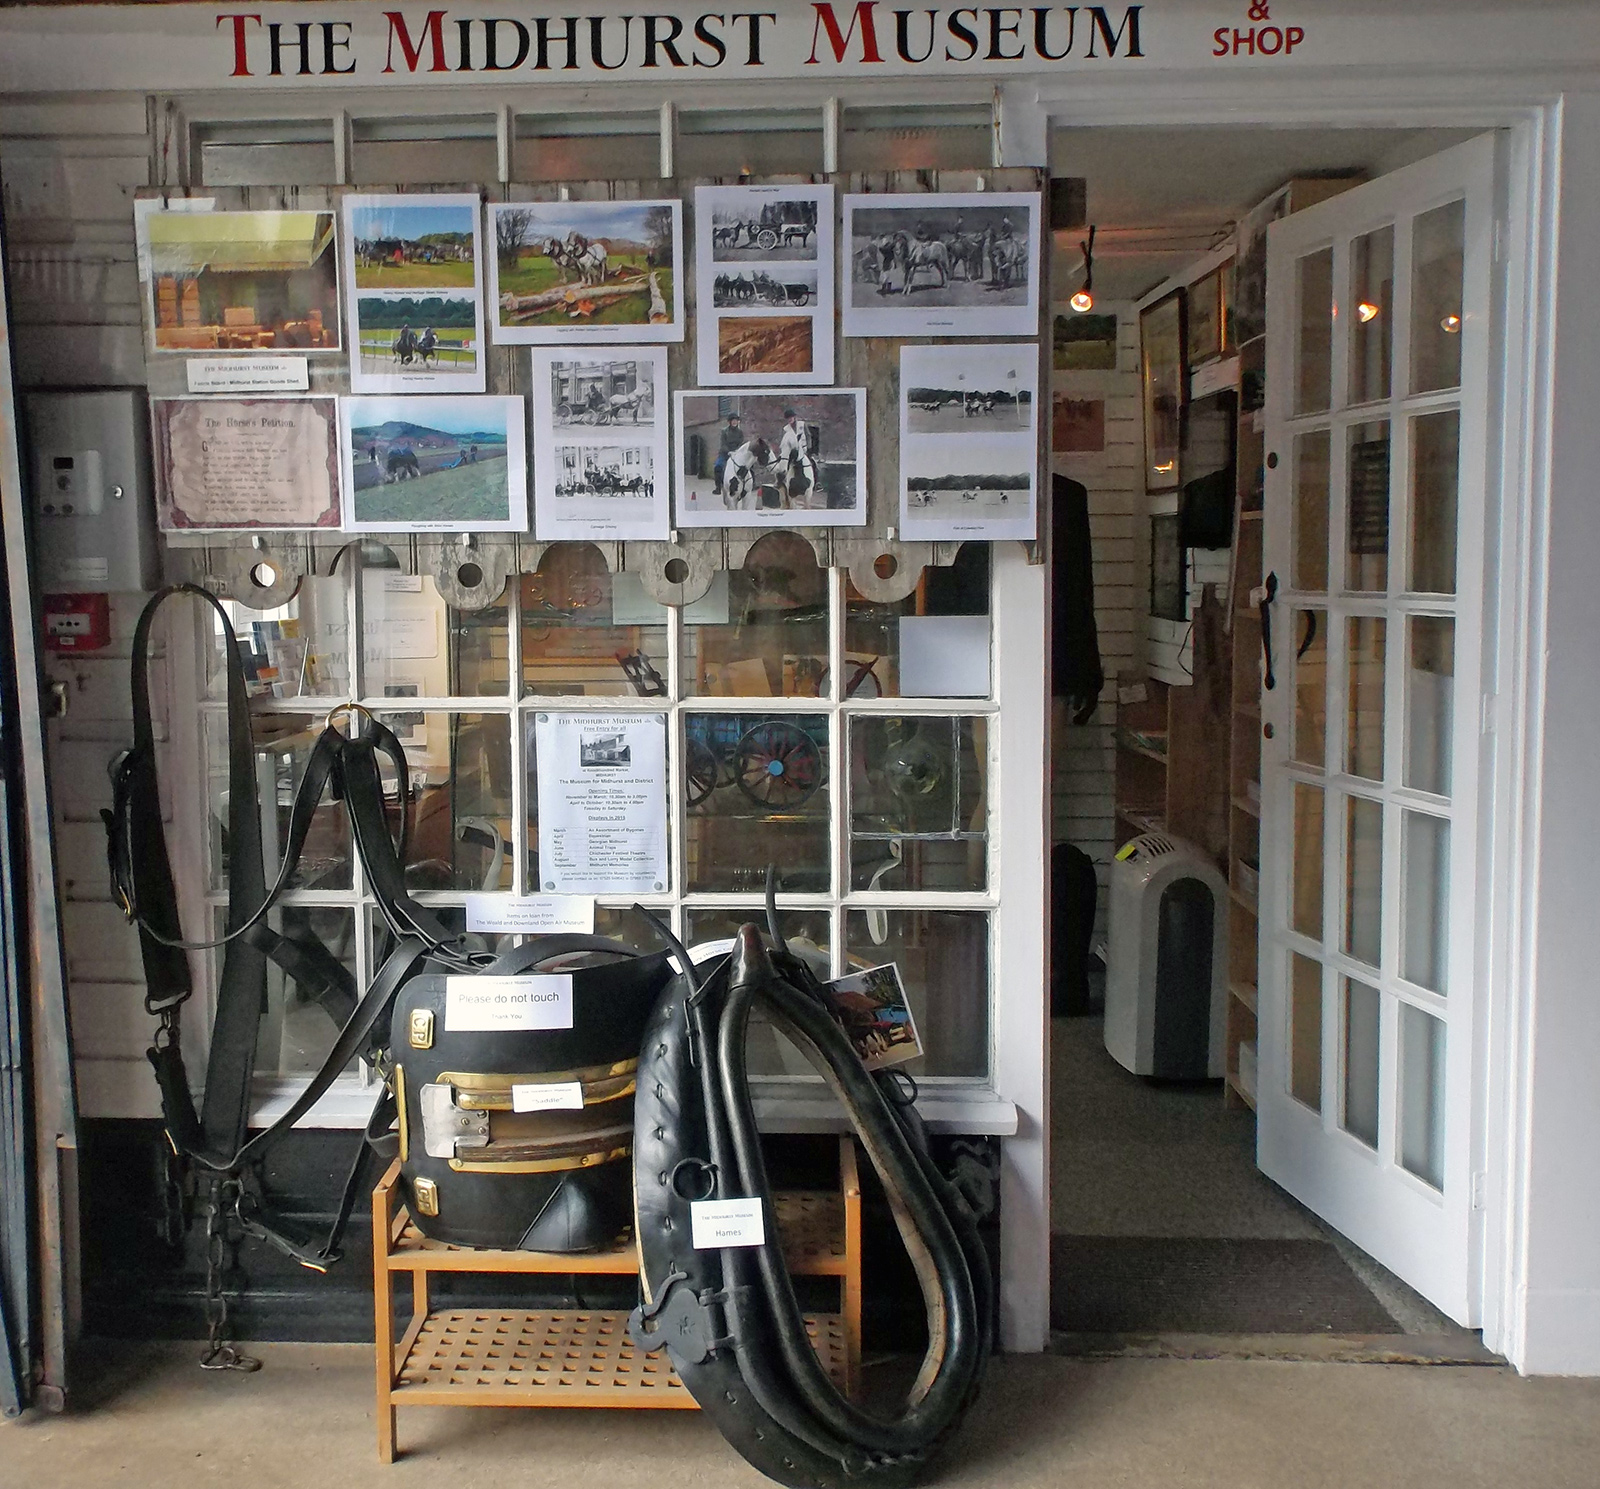 Advertiser image - Midhurst Museum